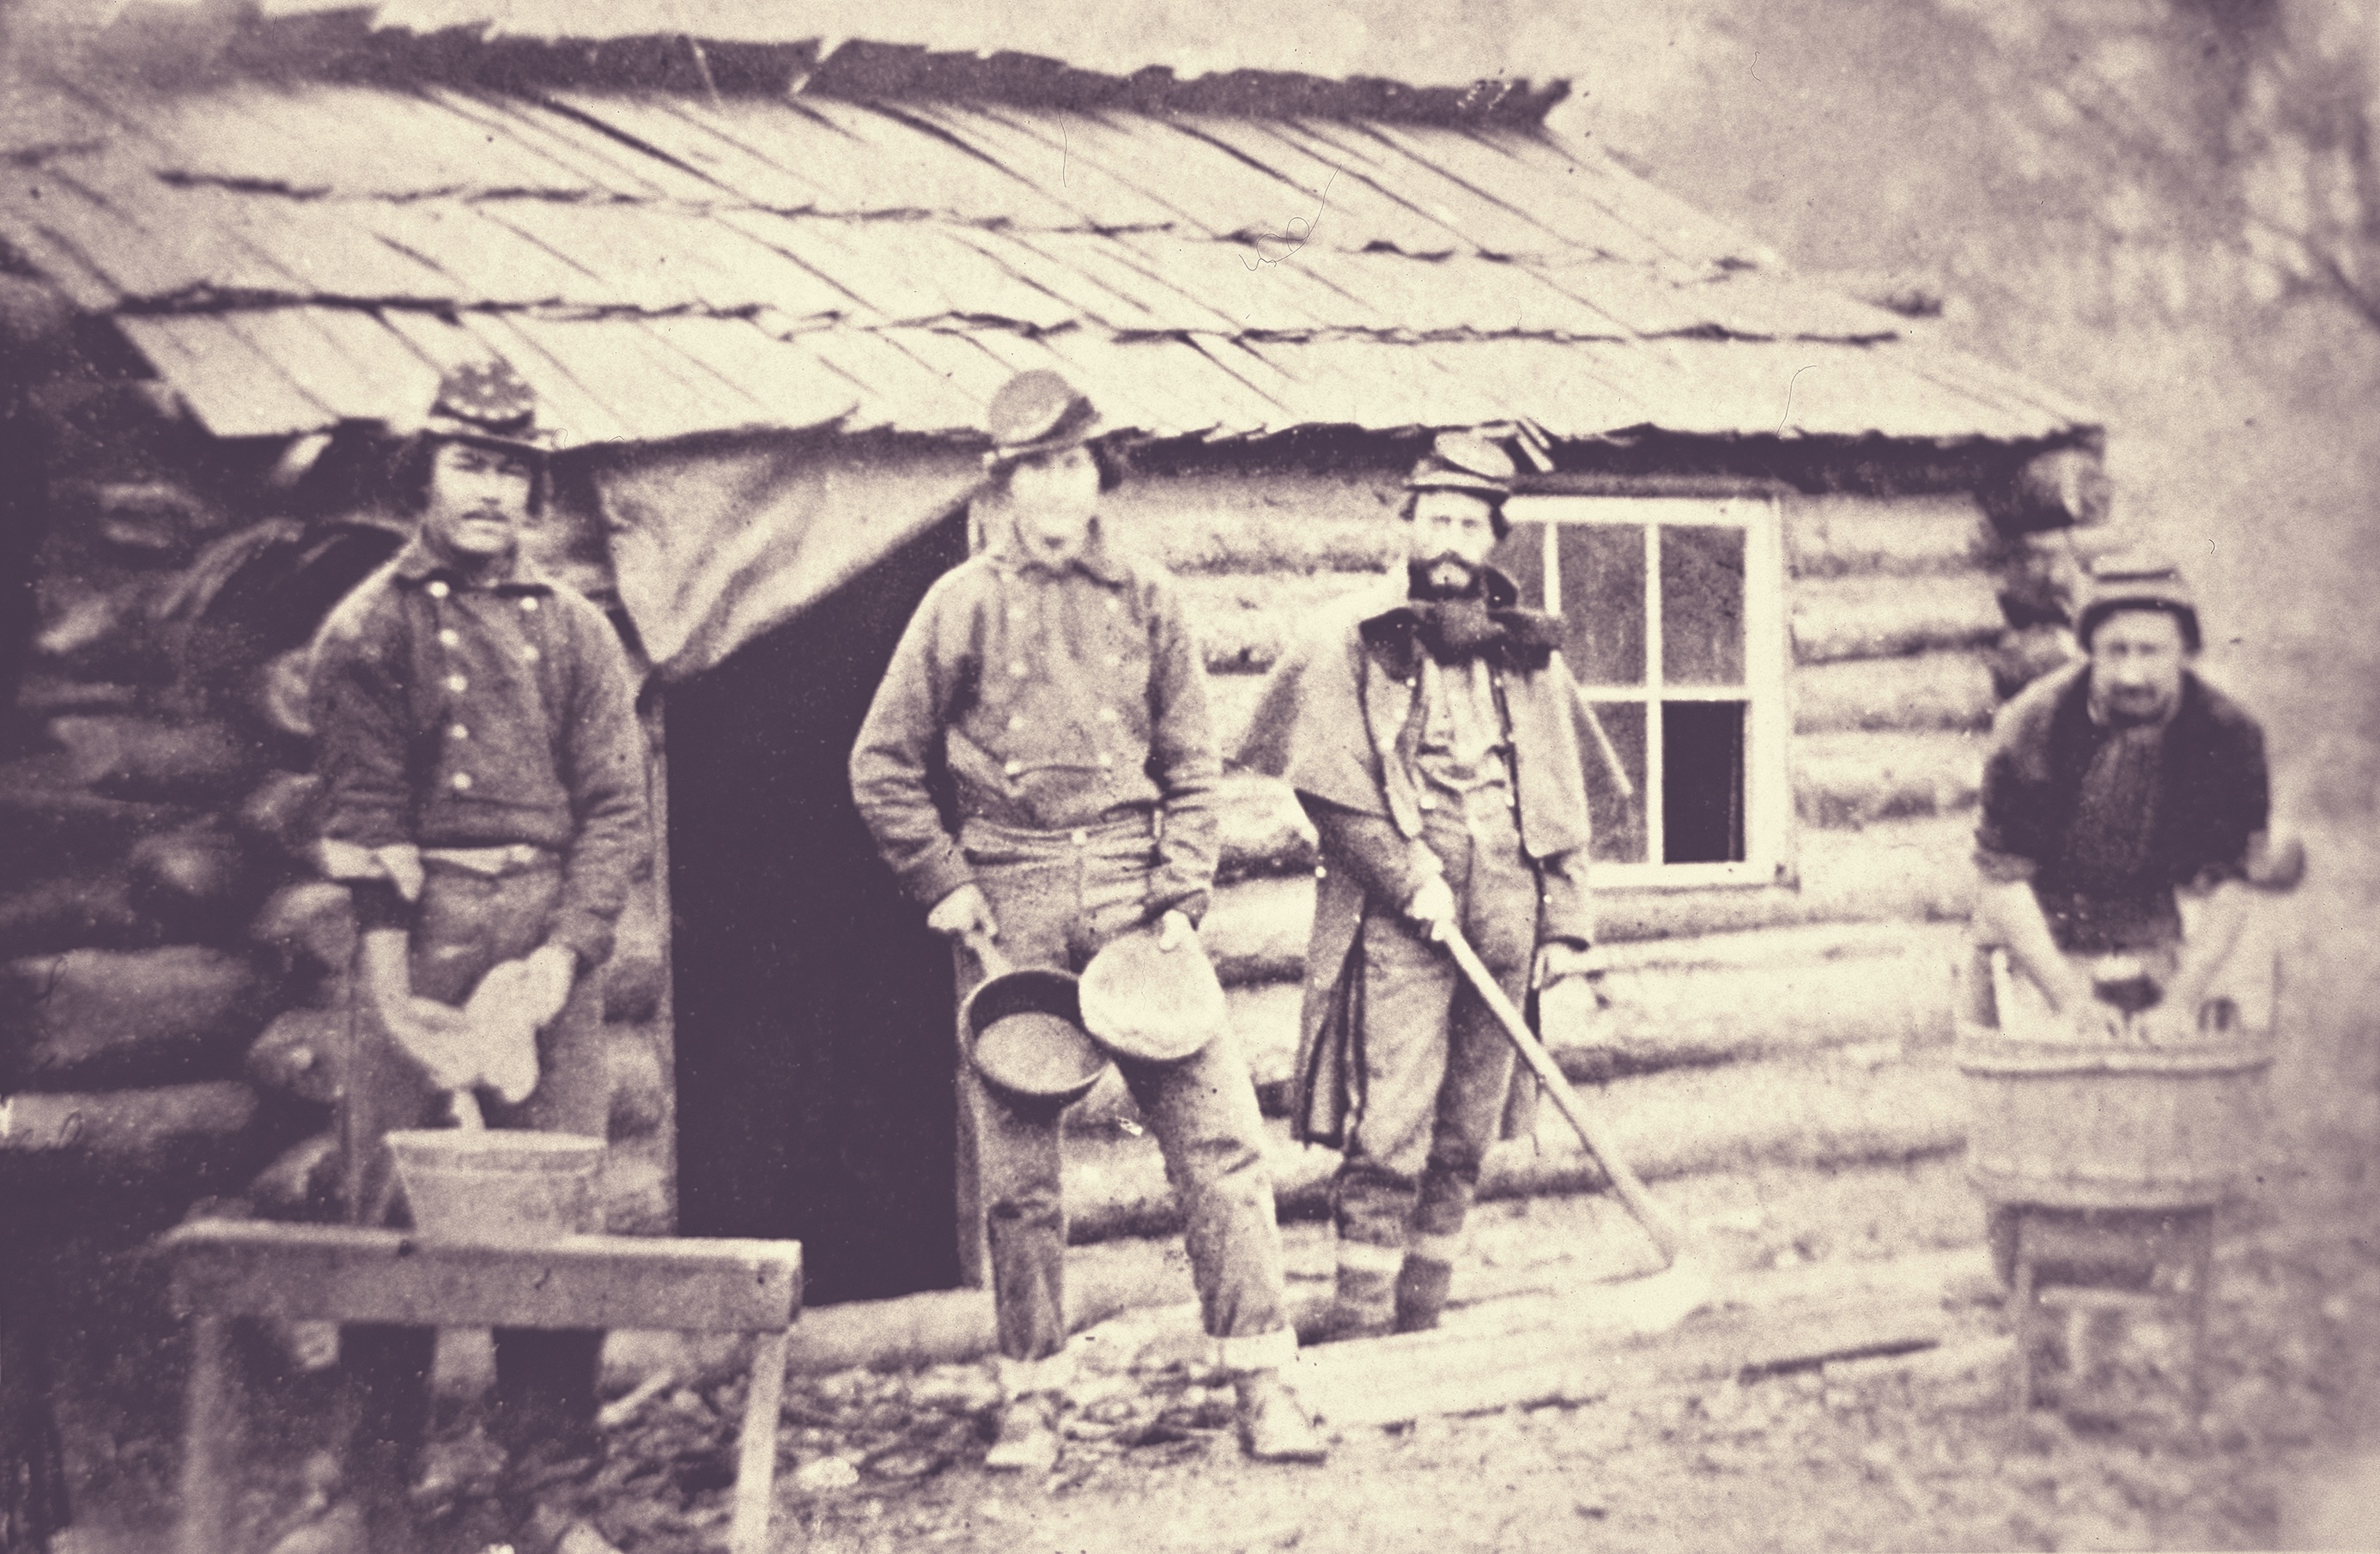 1st Texas Camp, Virginia 1861. (Peter Newark Military Images/Bridgeman Image)